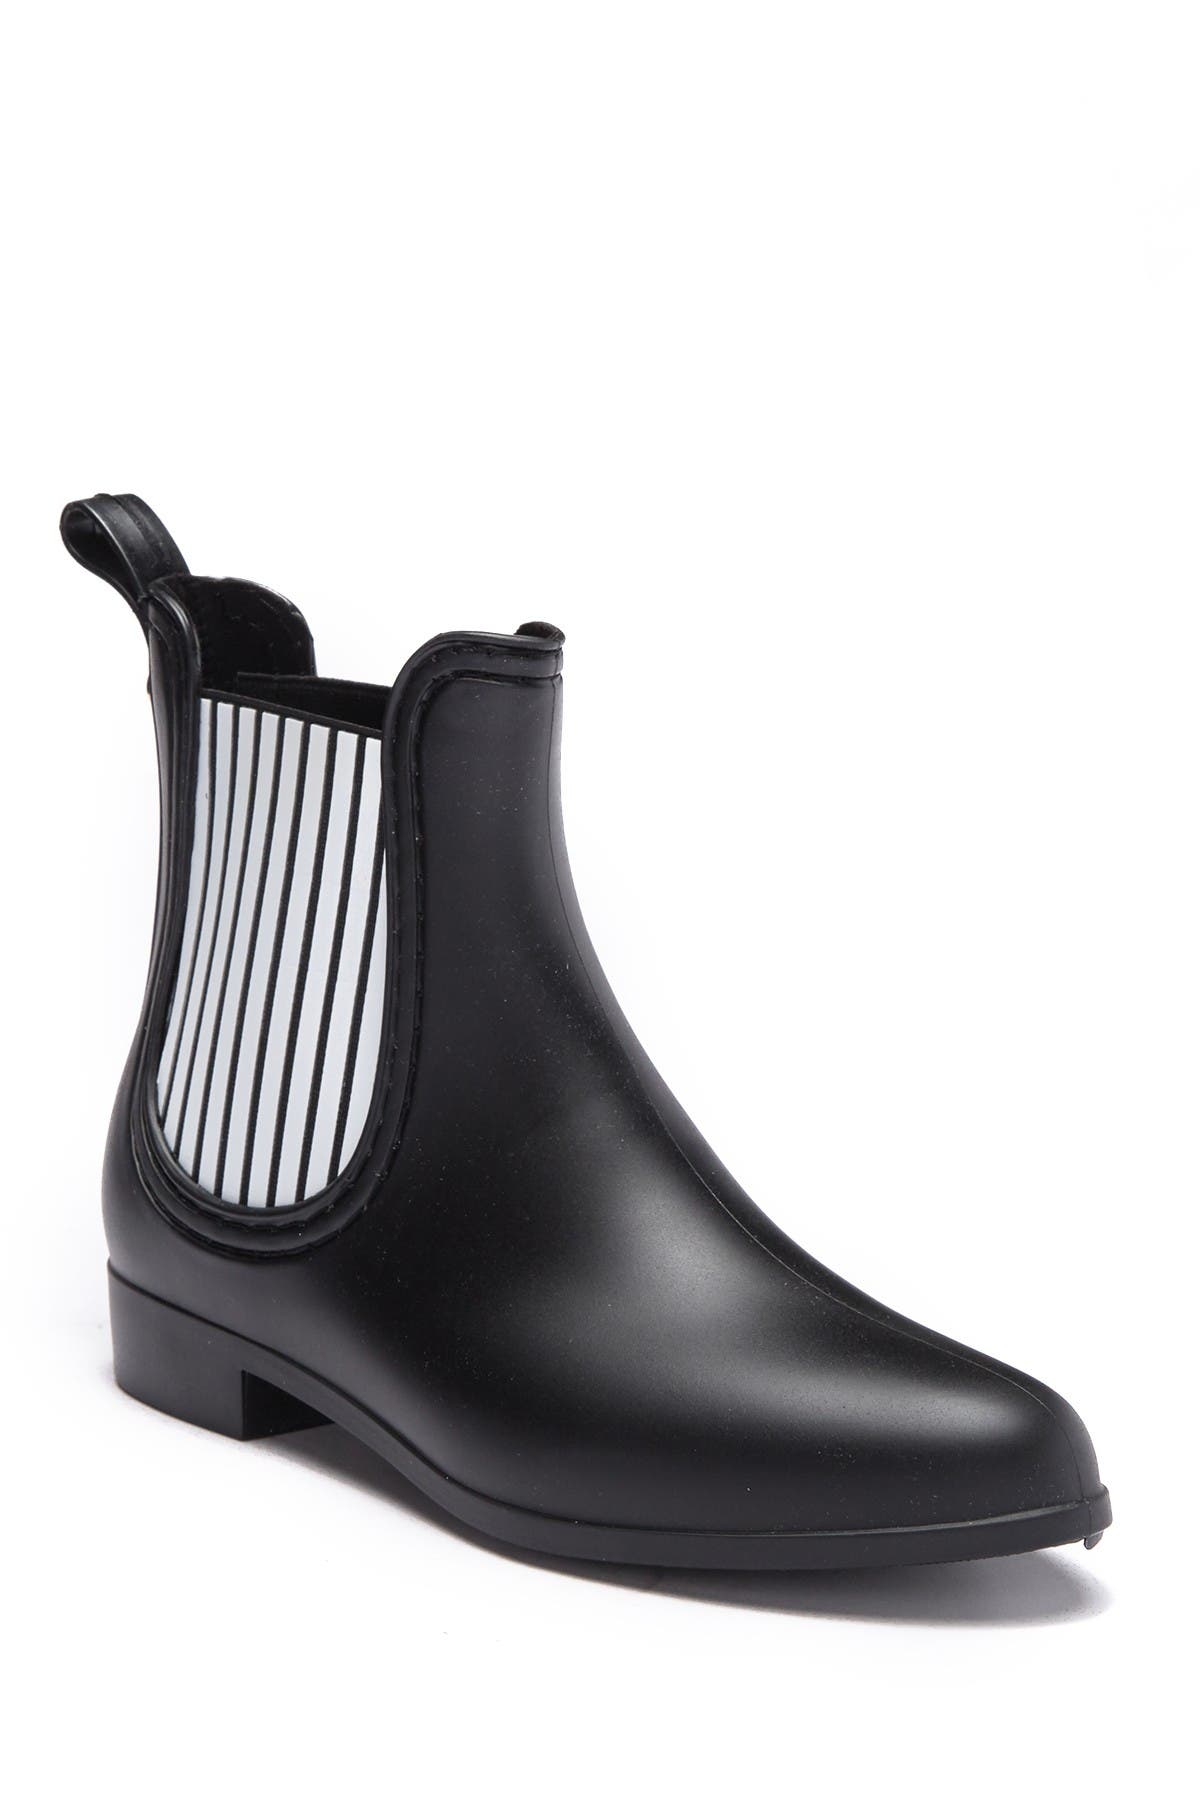 black and white striped rain boots